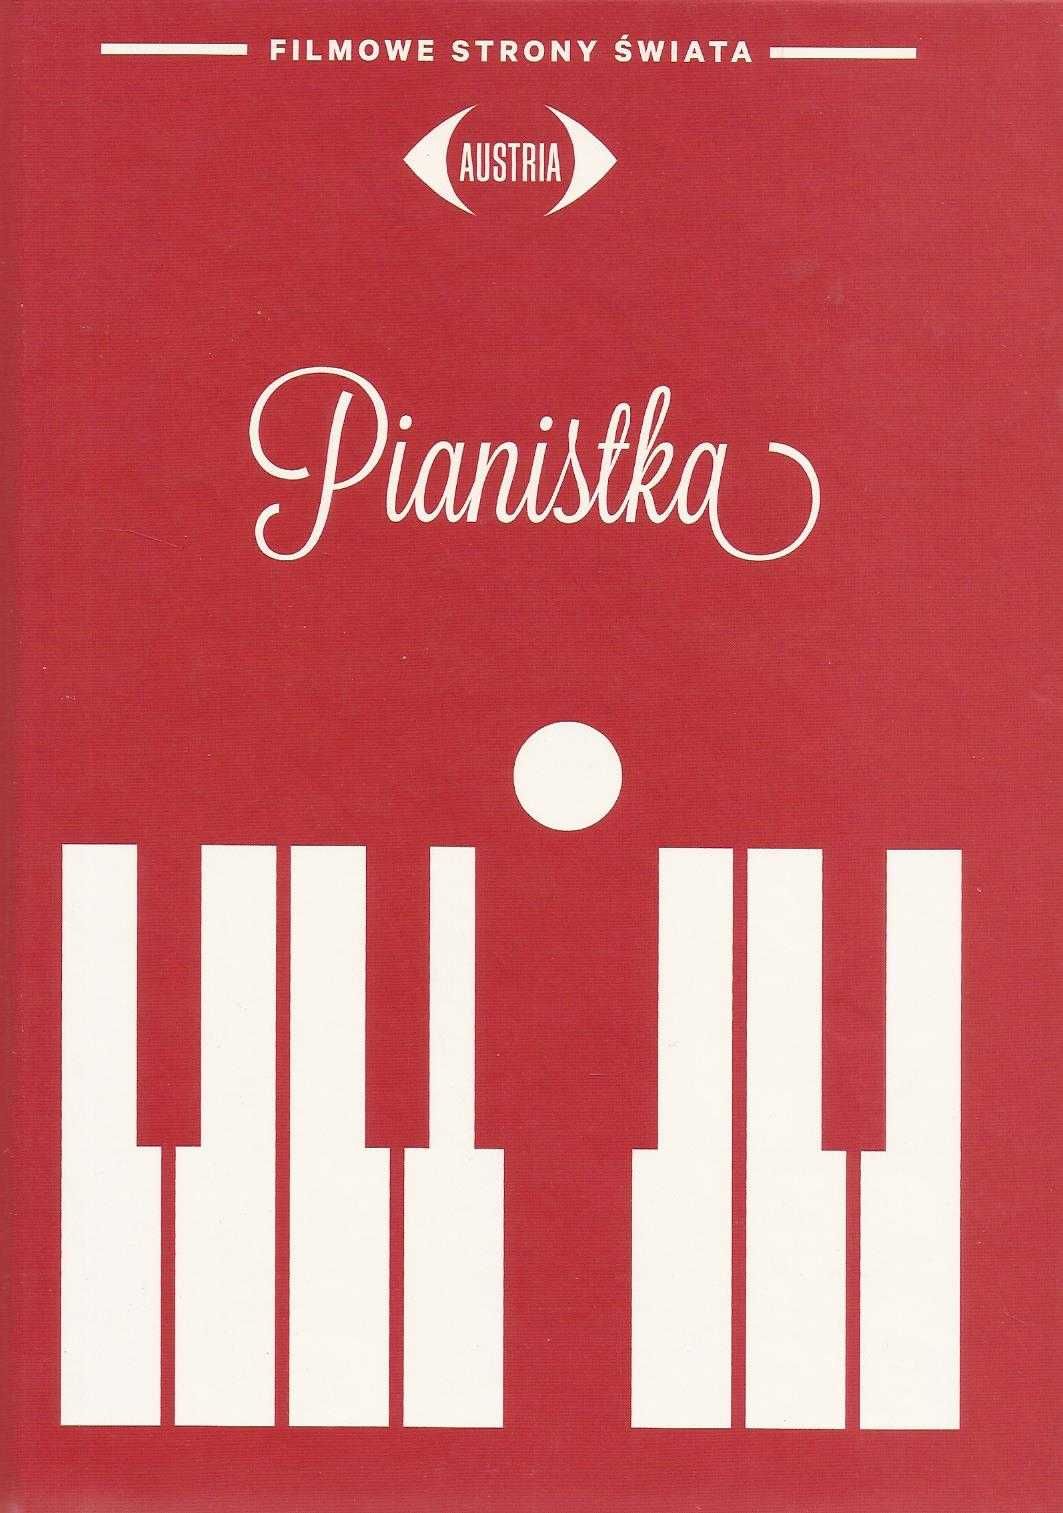 Pianistka (2001) reż. Michael Haneke DVD Lektor PL